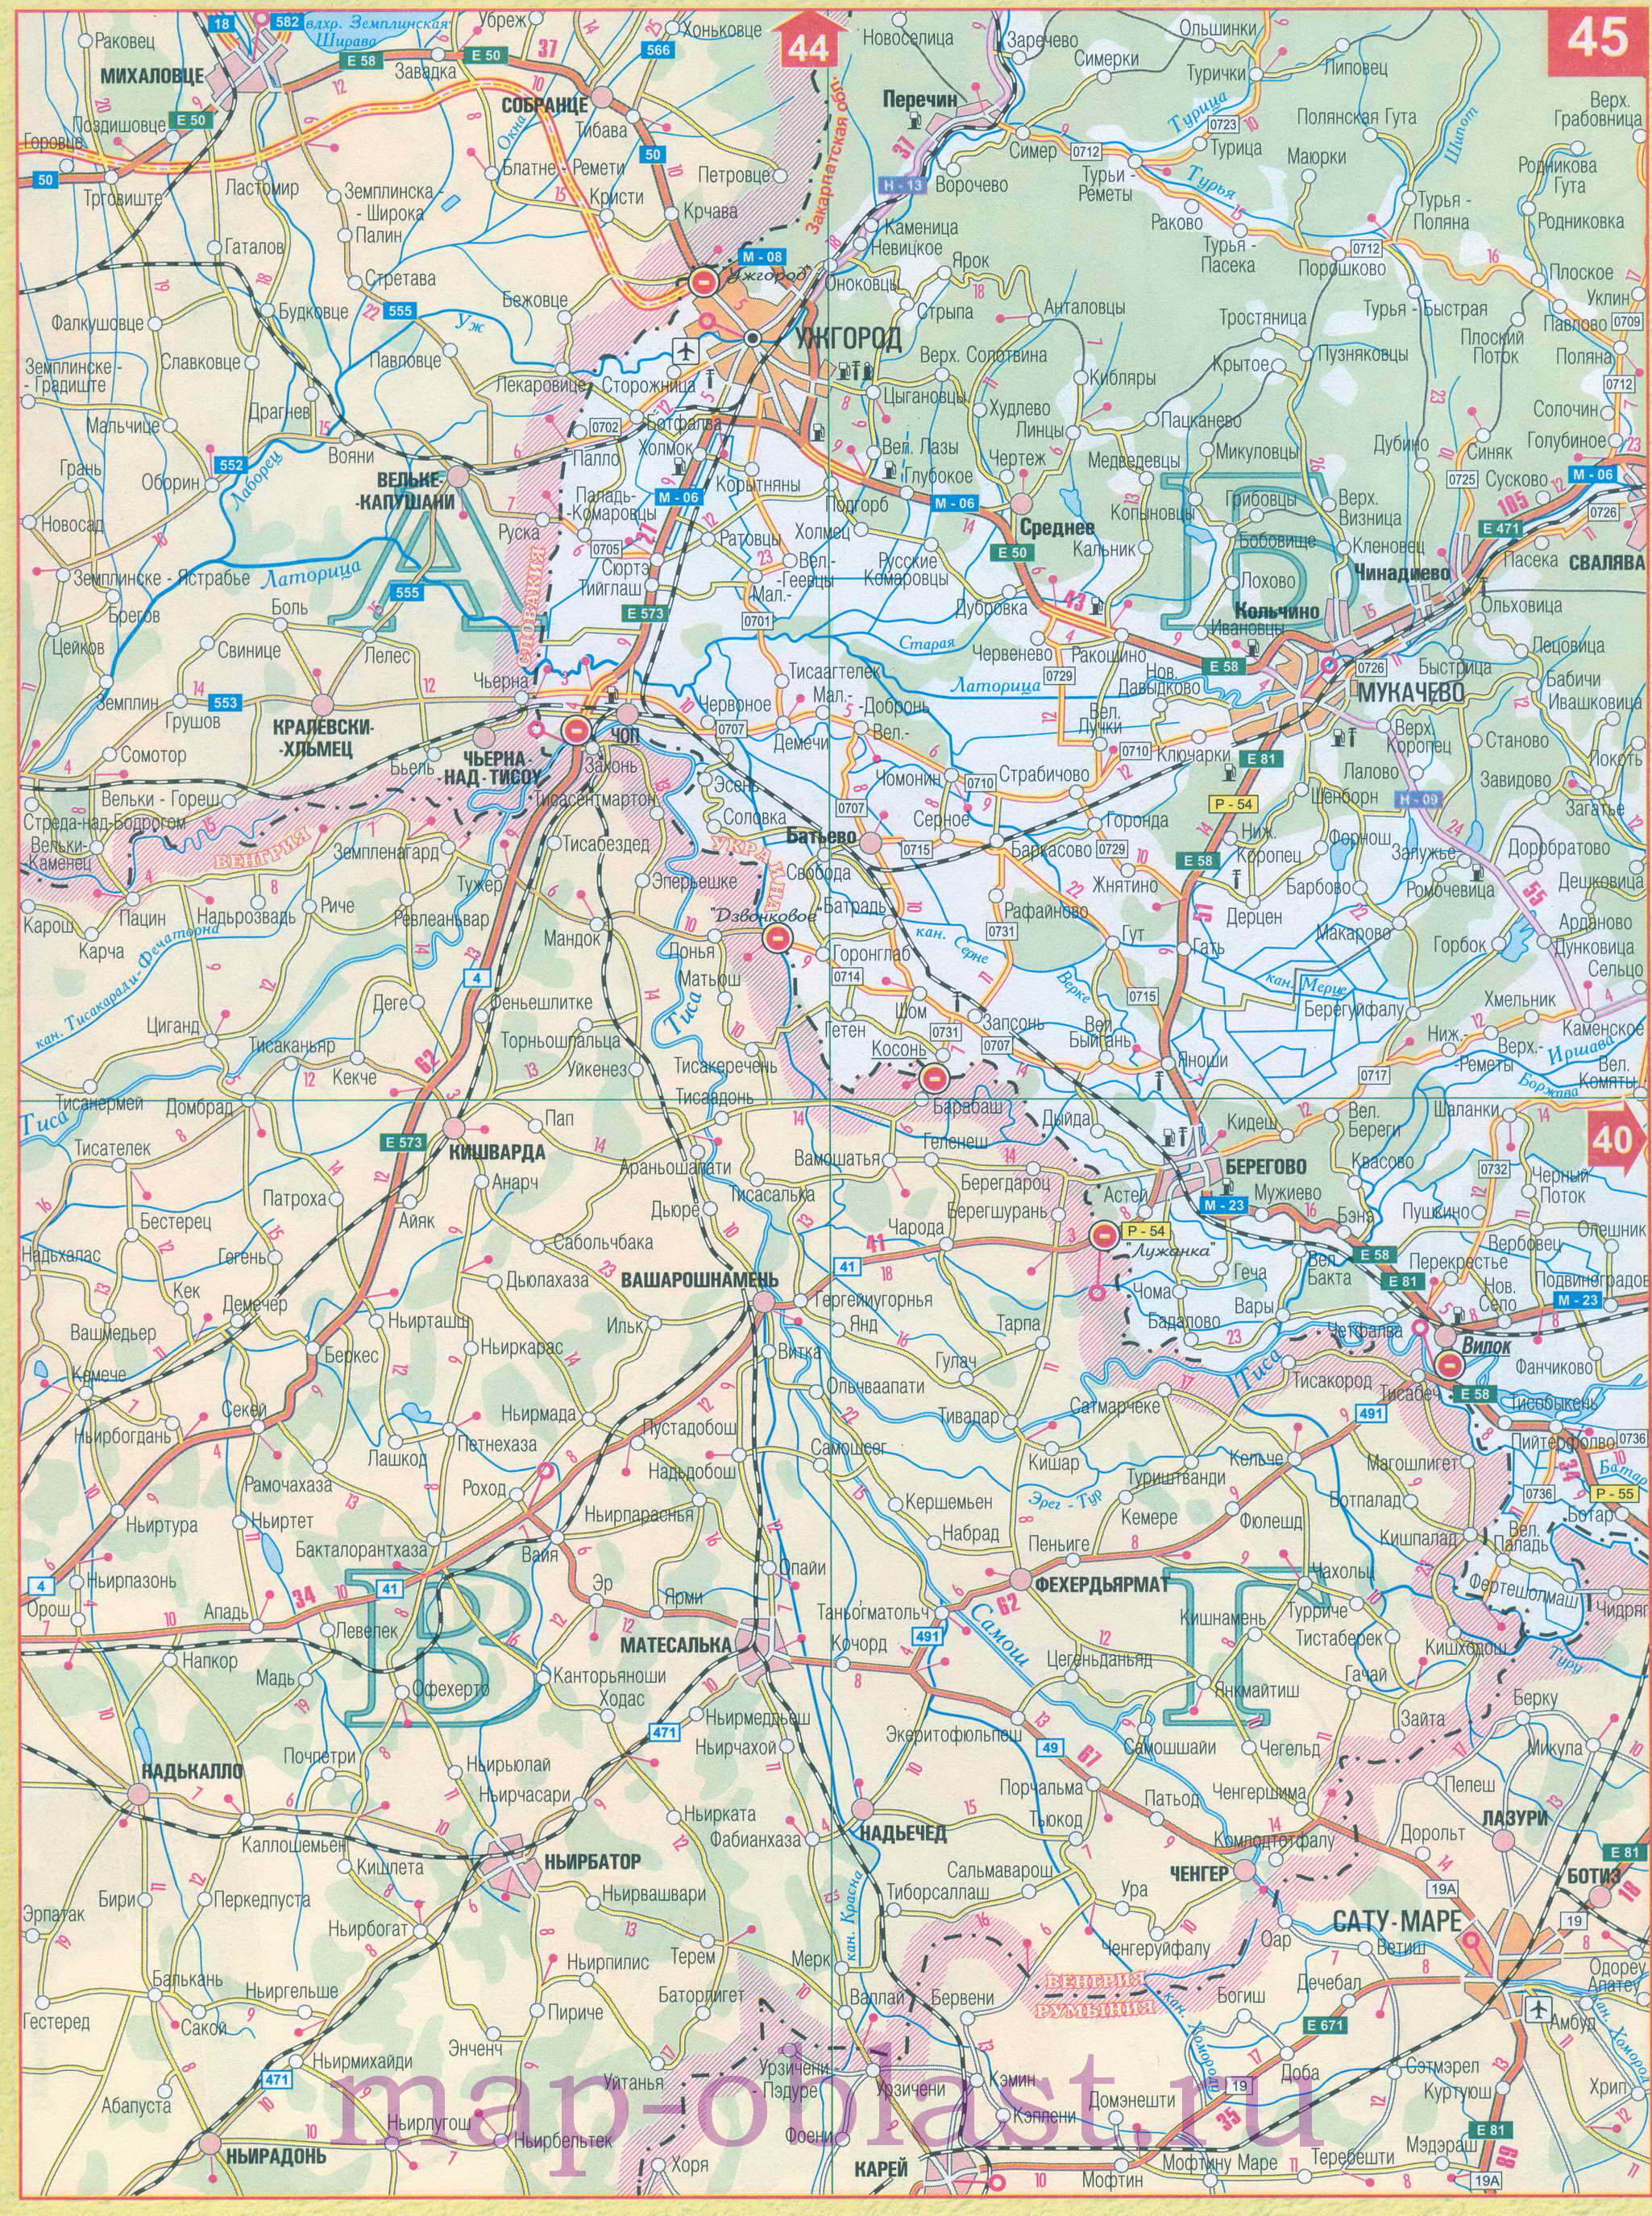 Карта дорог запада Украины - Закарпатская область. Подробная автомобильная карта Закарпатской области, A1 - 